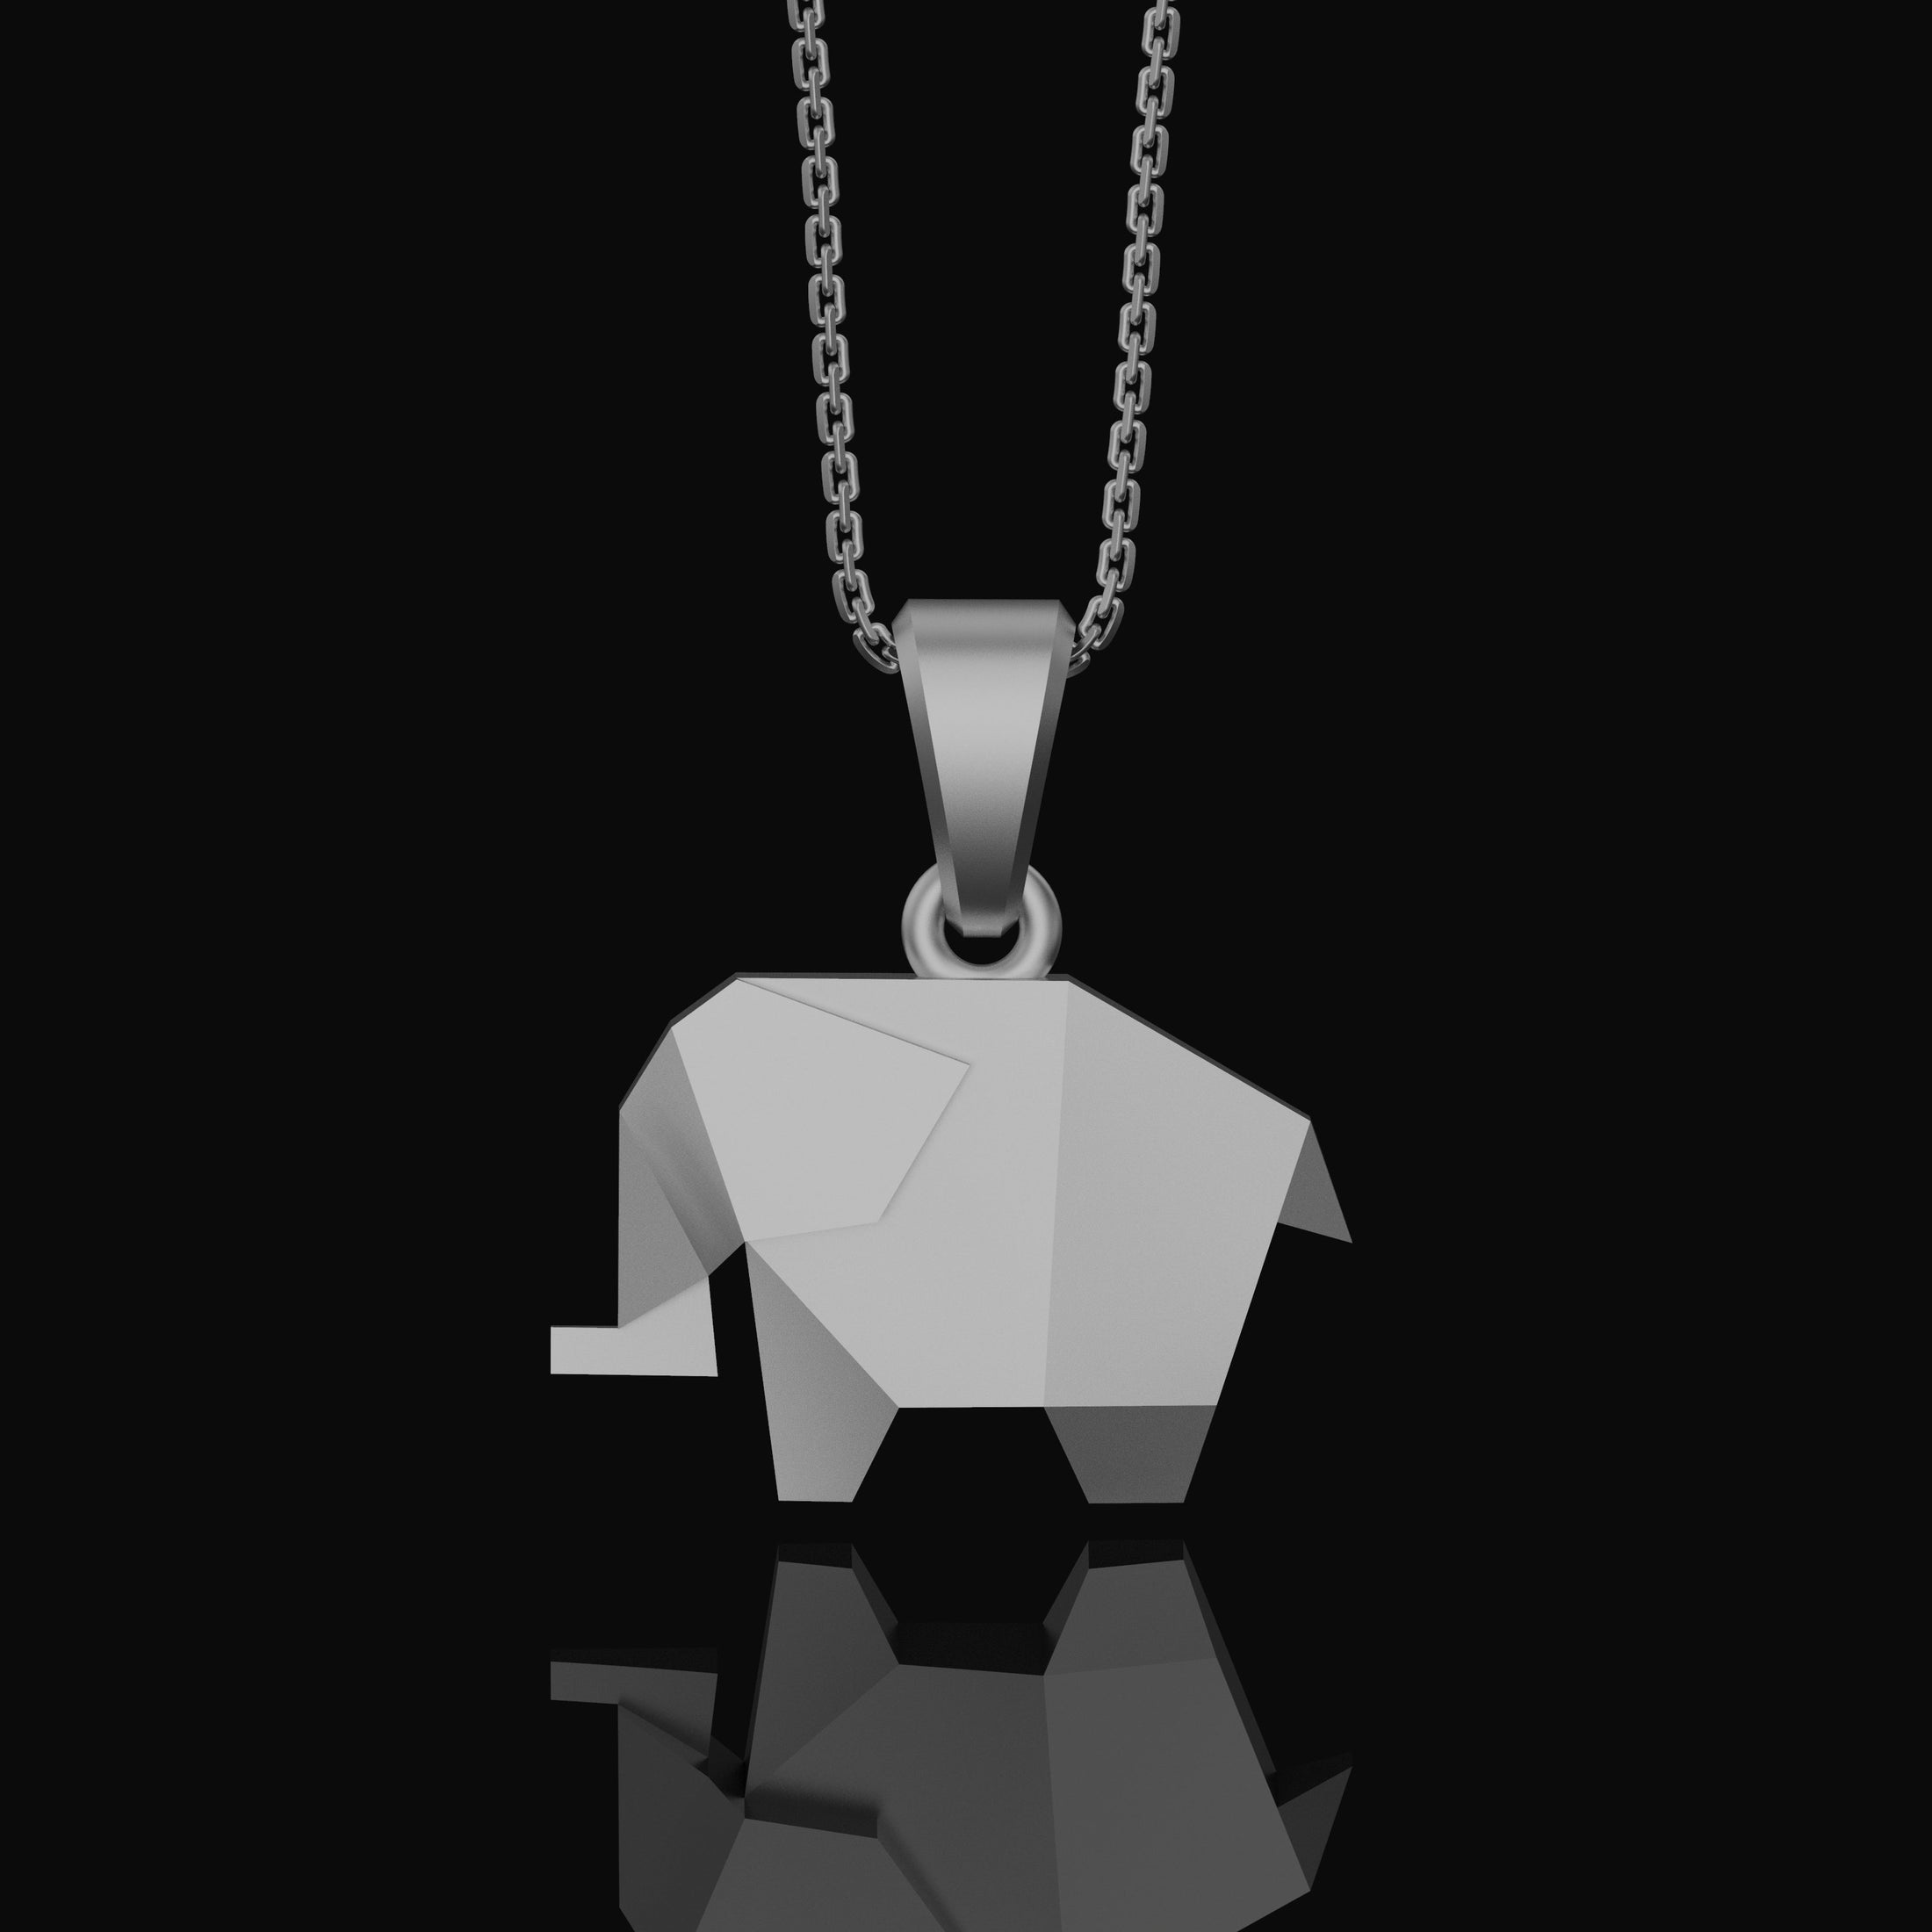 Origami Elephant Geometric Charm Necklace - Elegant Silver Pendant, Artistic Safari Wildlife Jewelry, Nature-Inspired Chic Accessory